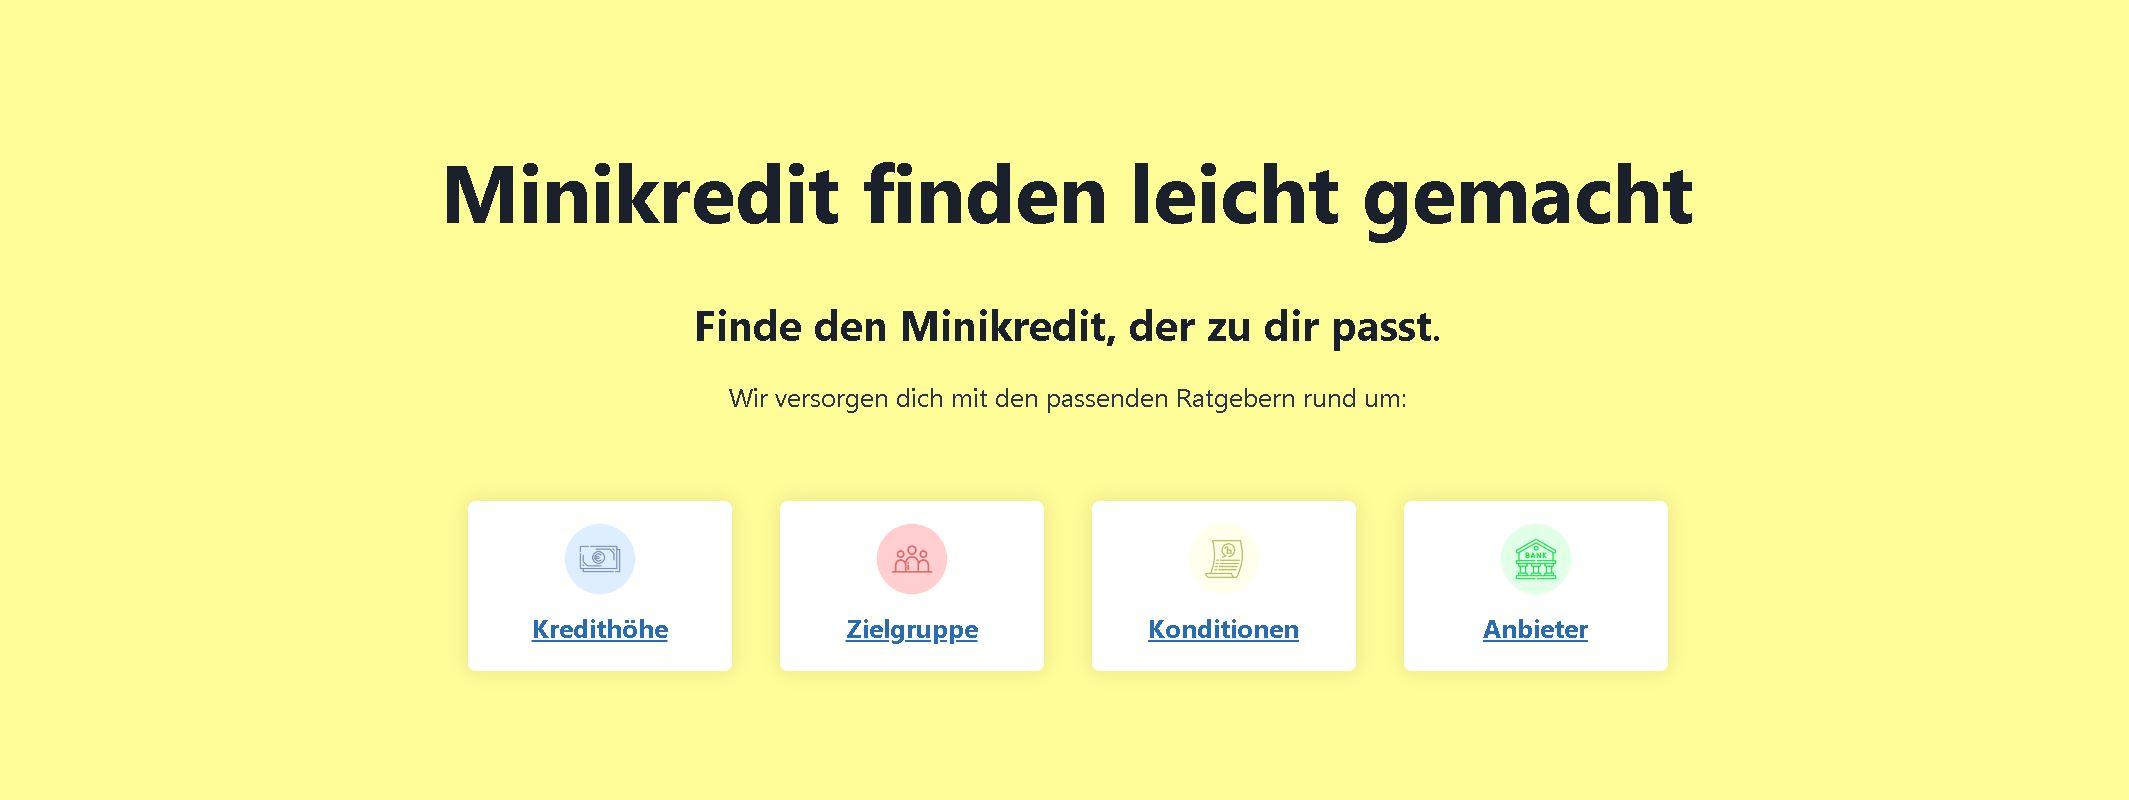 minikredite.org / startup from Dresden / Background